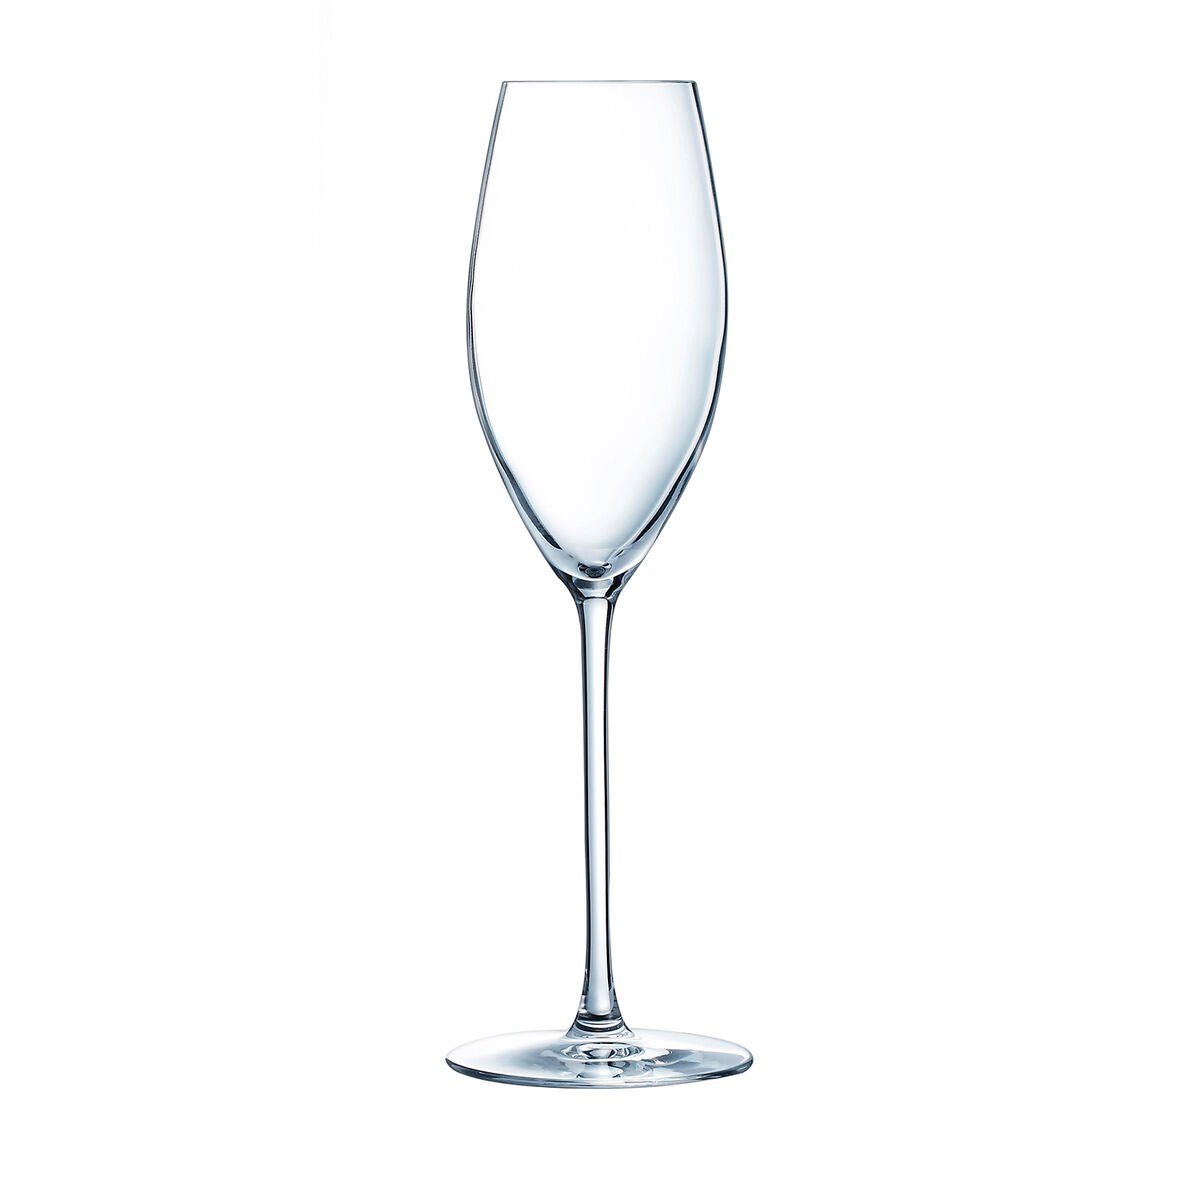 Luminarc Champagnerglas Glas Stück, Glas Durchsichtig Luminarc 240 Glas Grand ml 12 Chais